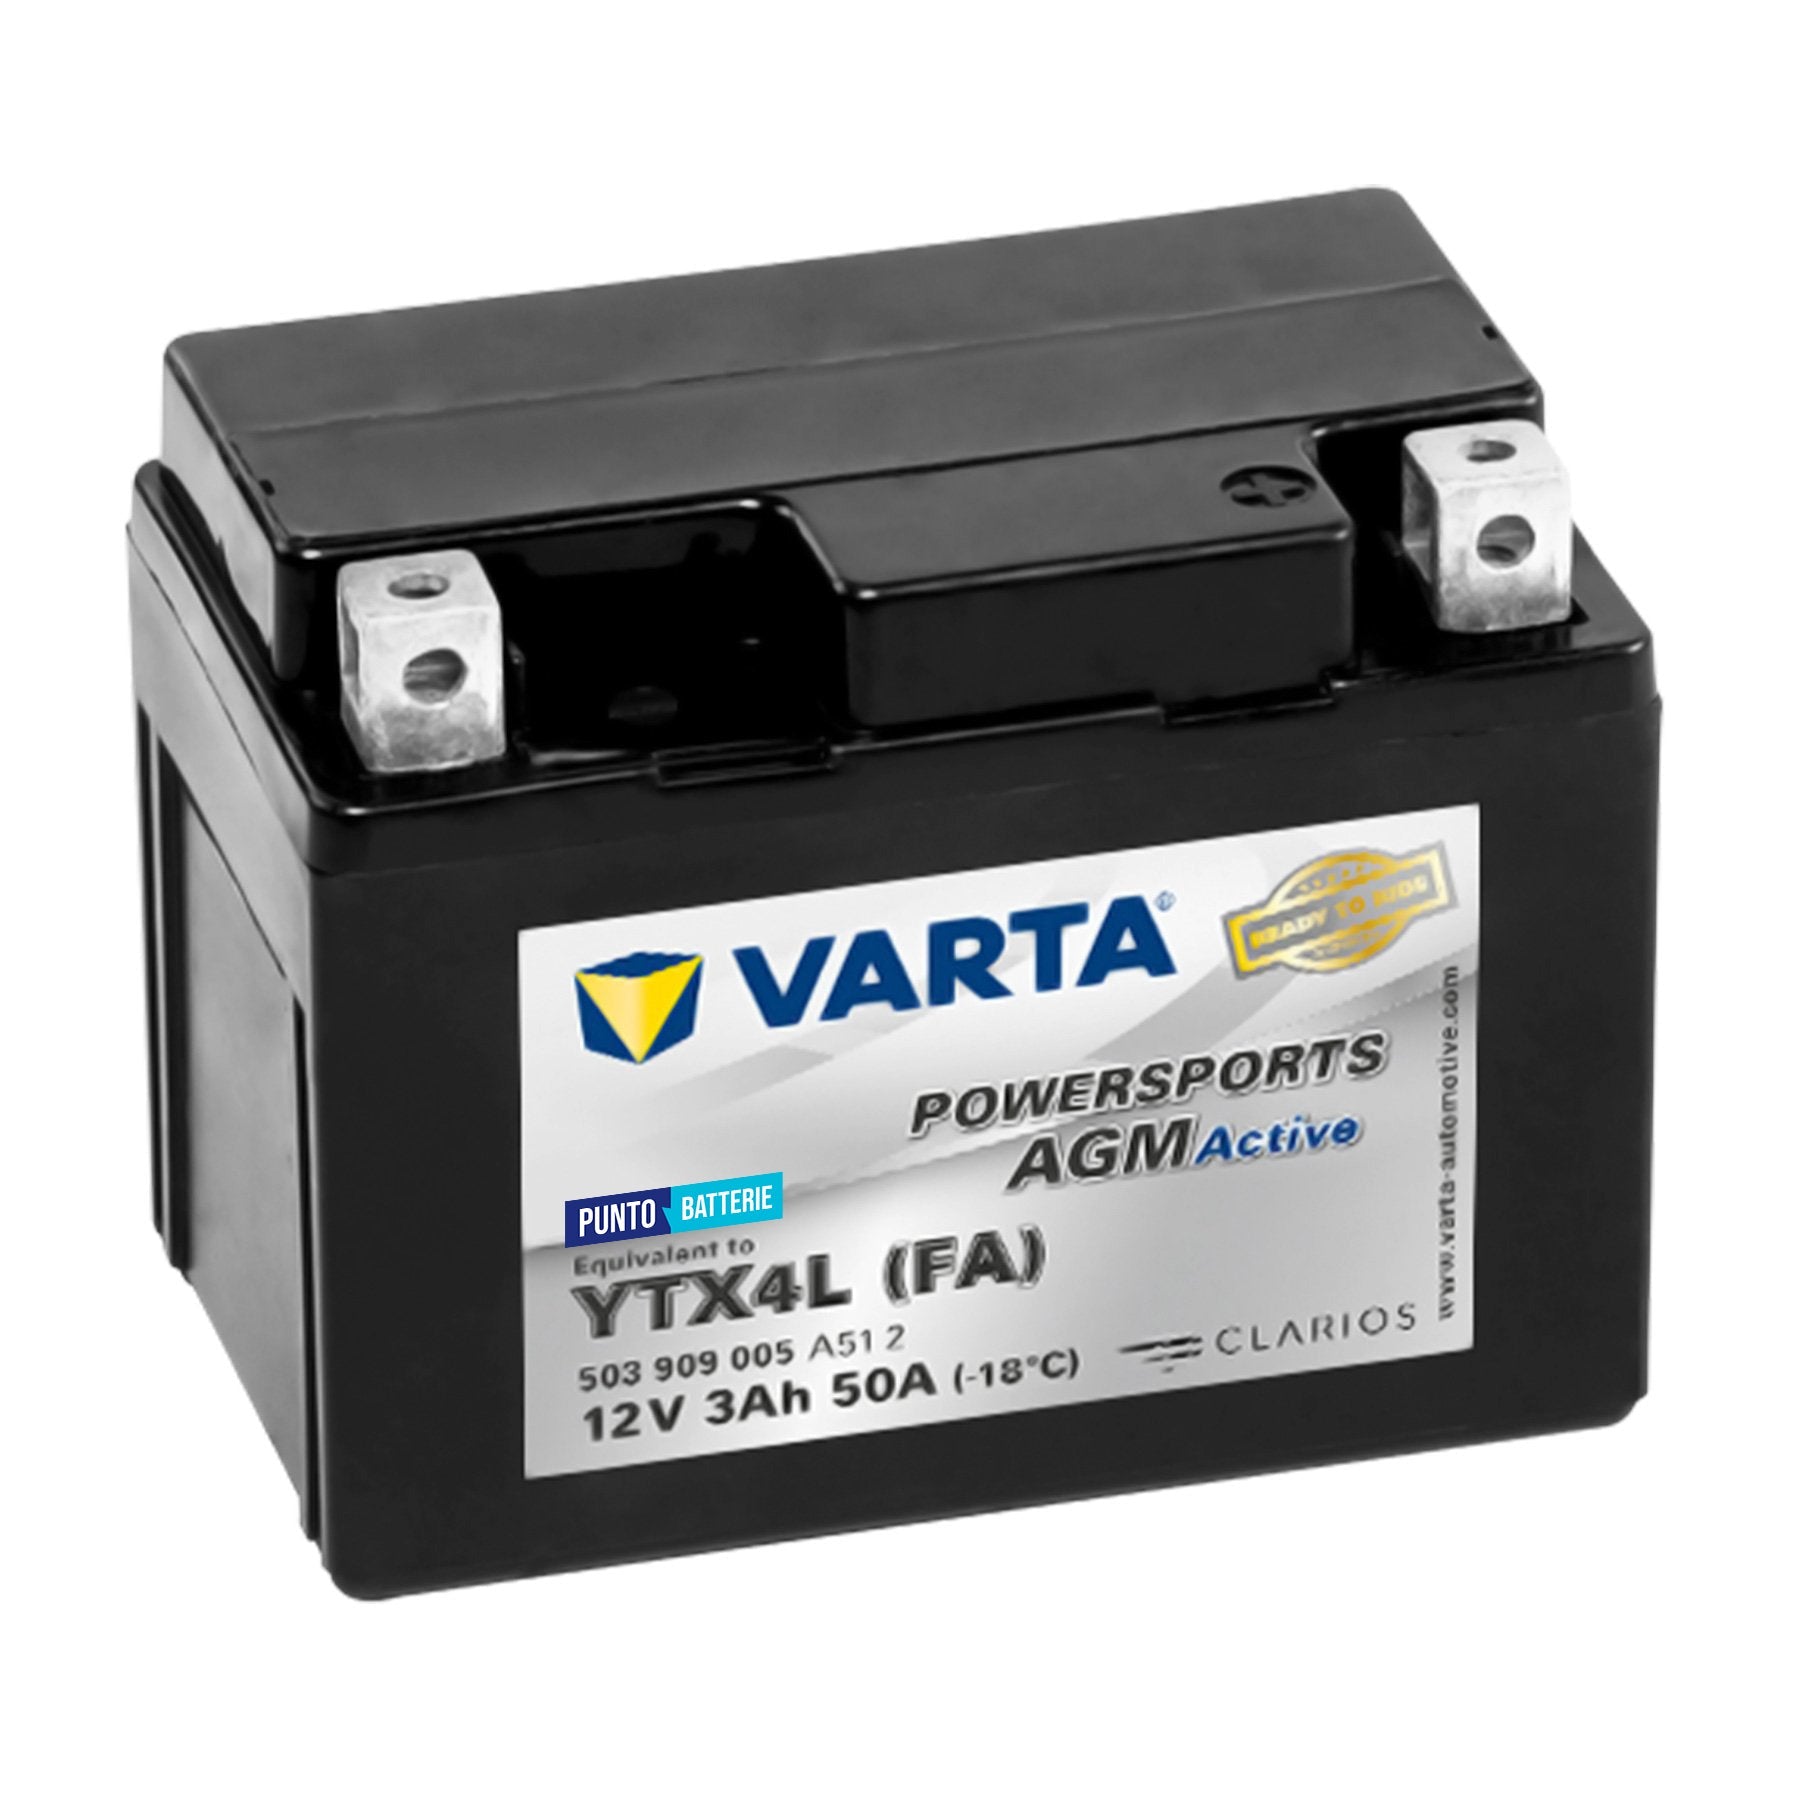 Batteria originale Varta Powersport AGM Active YTX4L-FA, dimensioni 166 x 127 x 175, polo positivo a destra, 12 volt, 3 amperora, 50 ampere. Batteria per moto, scooter e powersport.